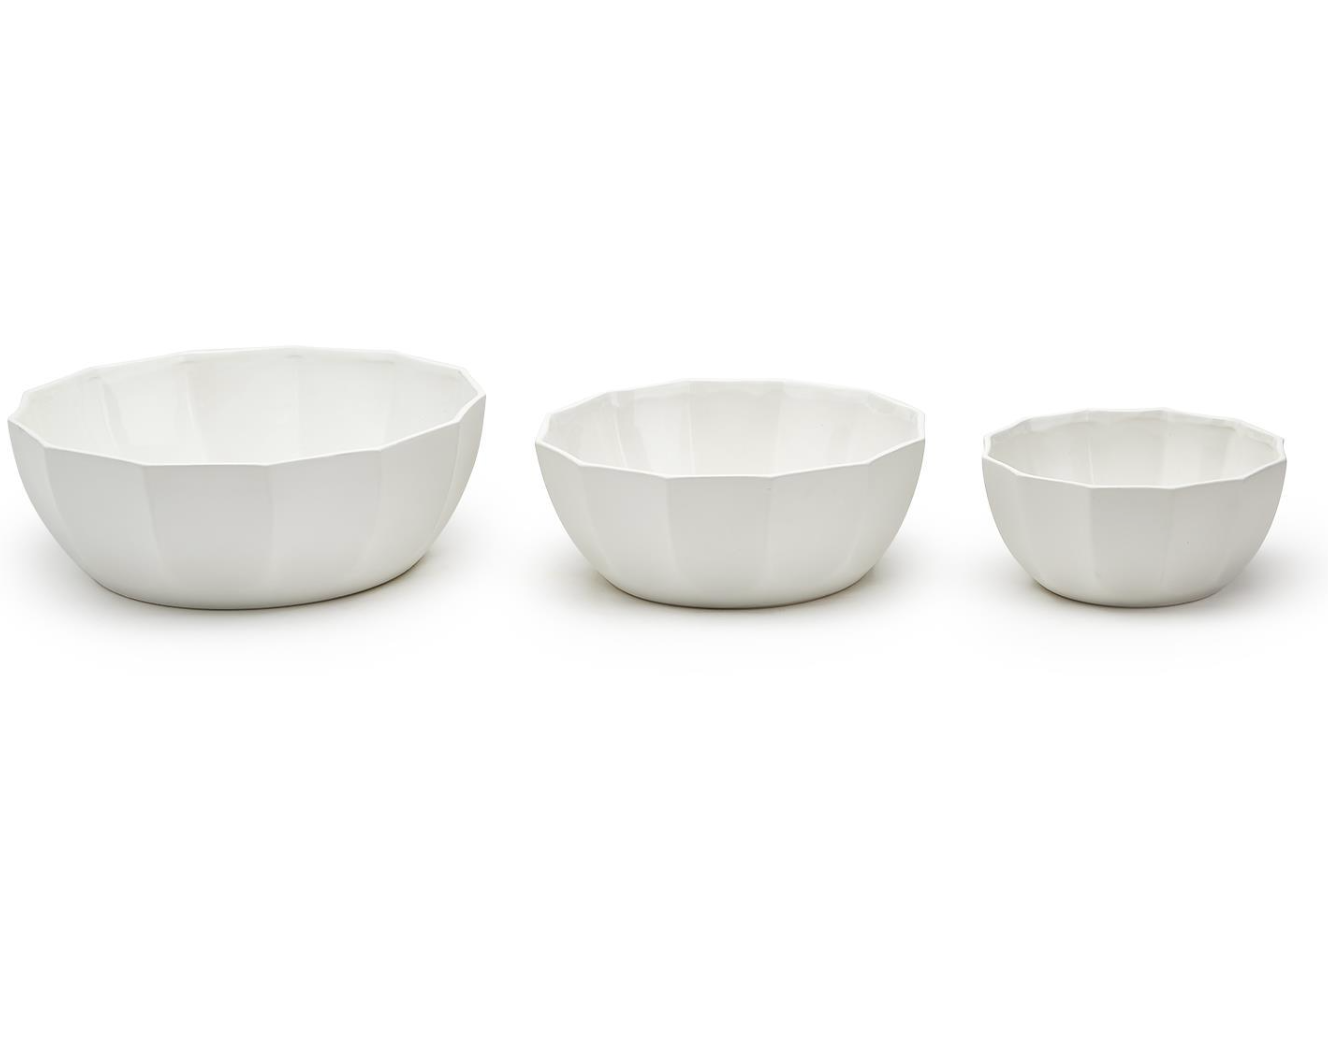 Octagonal Ceramic Bowls